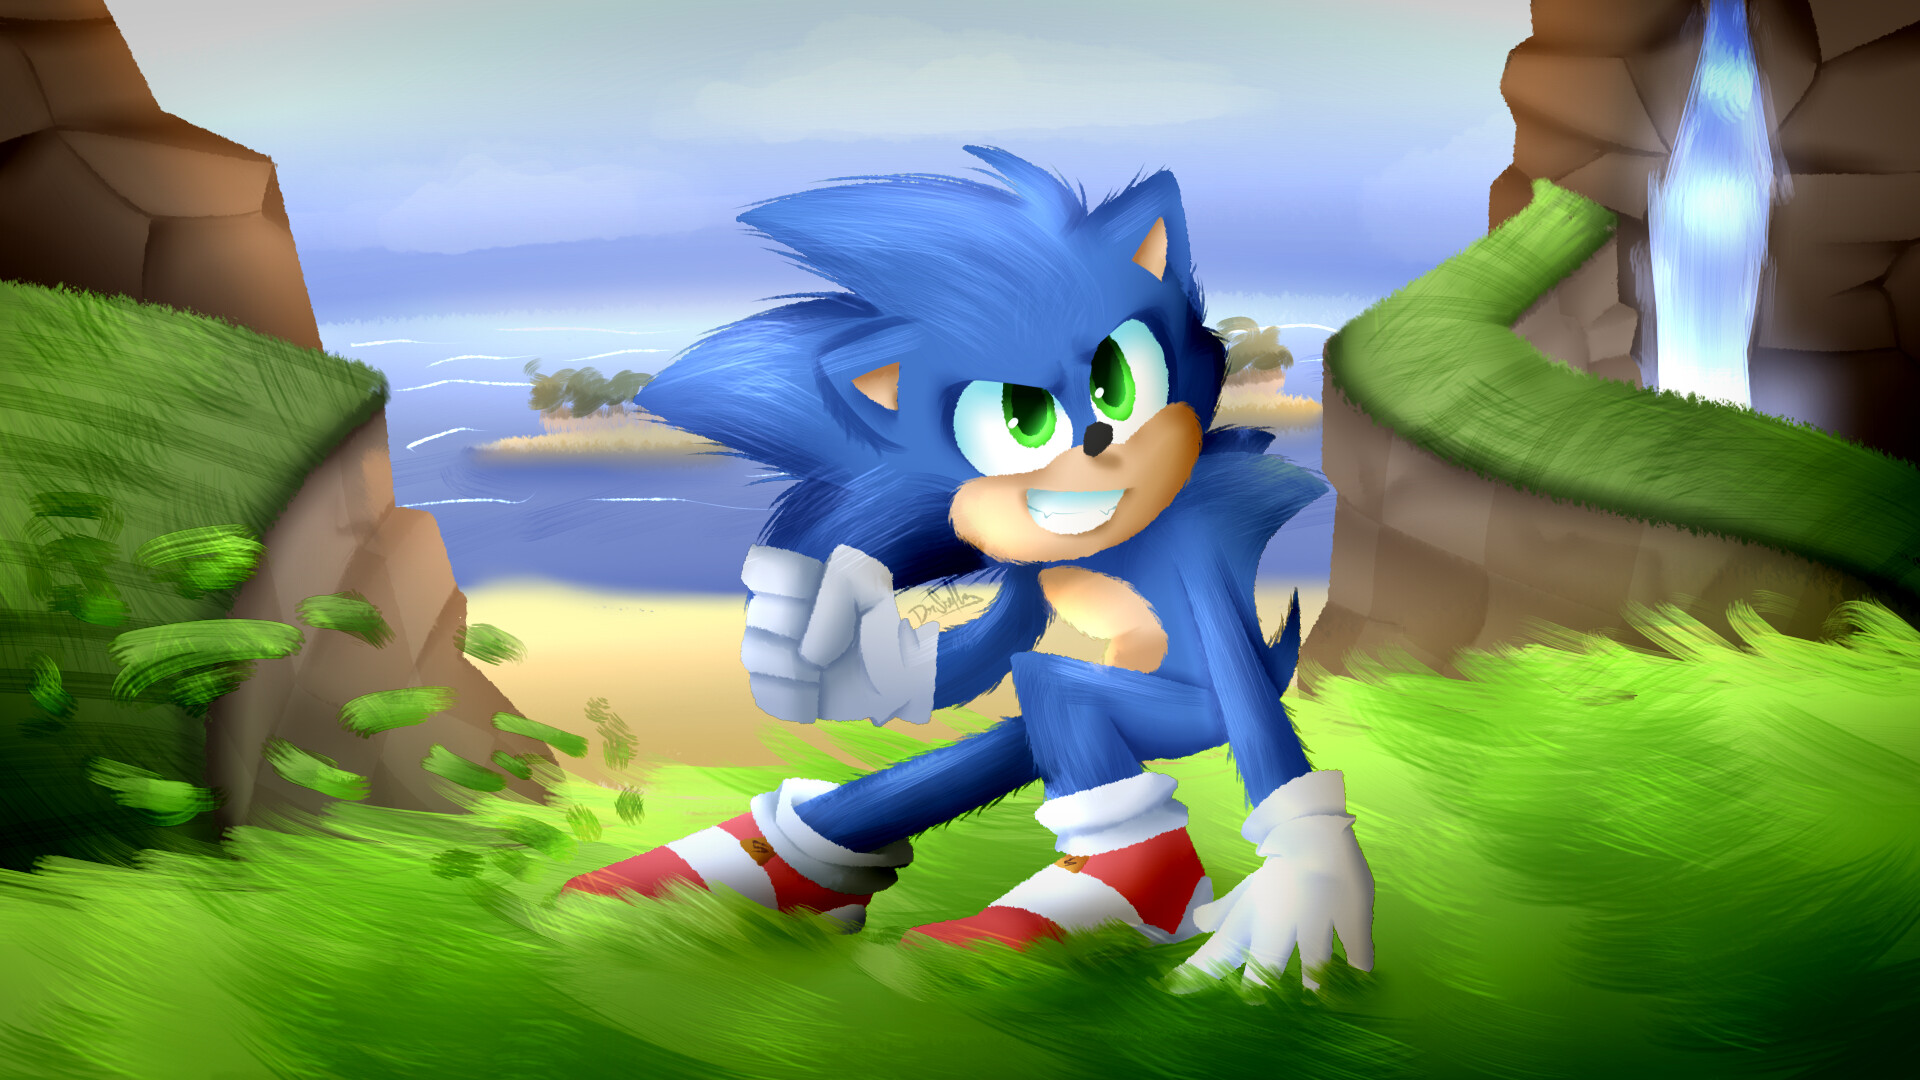 ArtStation - 2019 Sonic the Hedgehog Movie Poster Re-Mastered